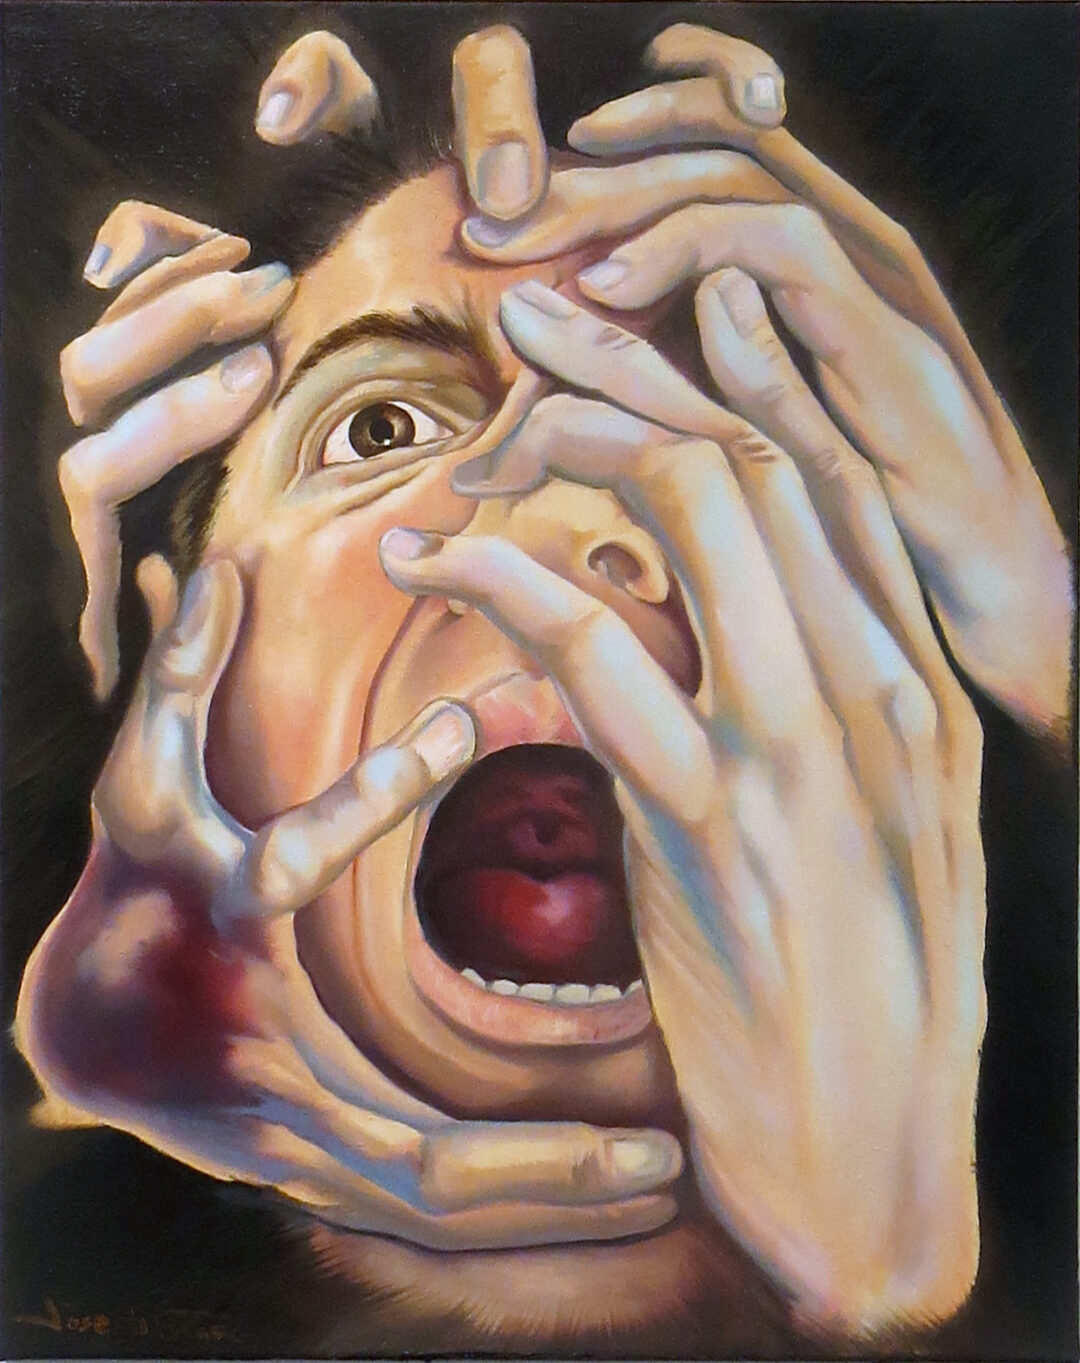 Joseph Funaro “My Nightmare” oil on canvas, 16”W  x 20”H – $850.00